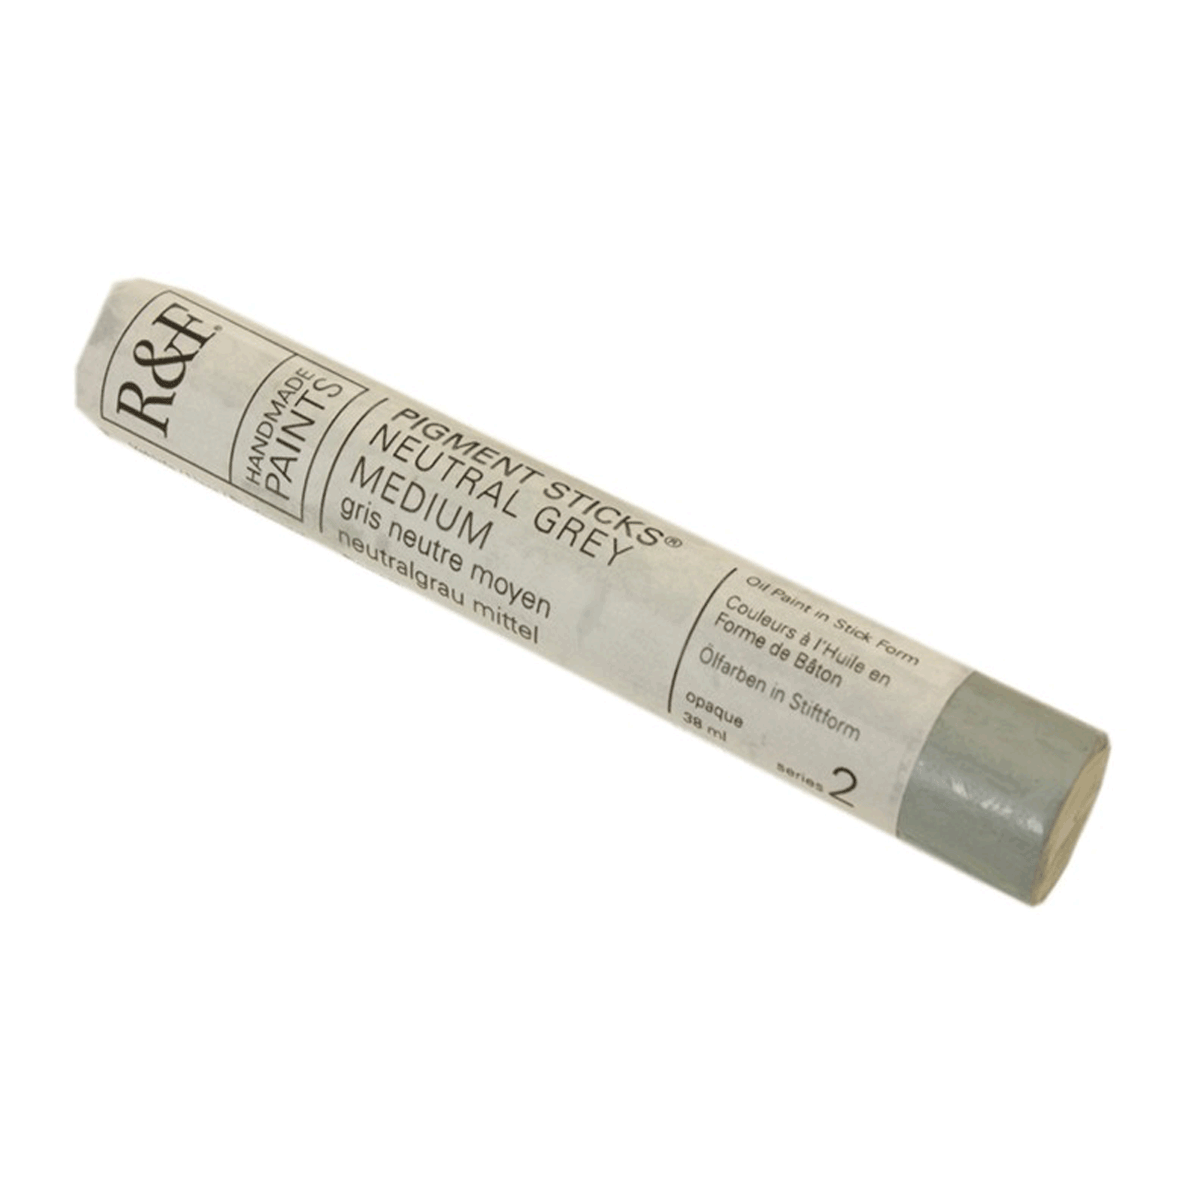 R&F Oil Pigment Stick, Neutral Grey Medium 38ml